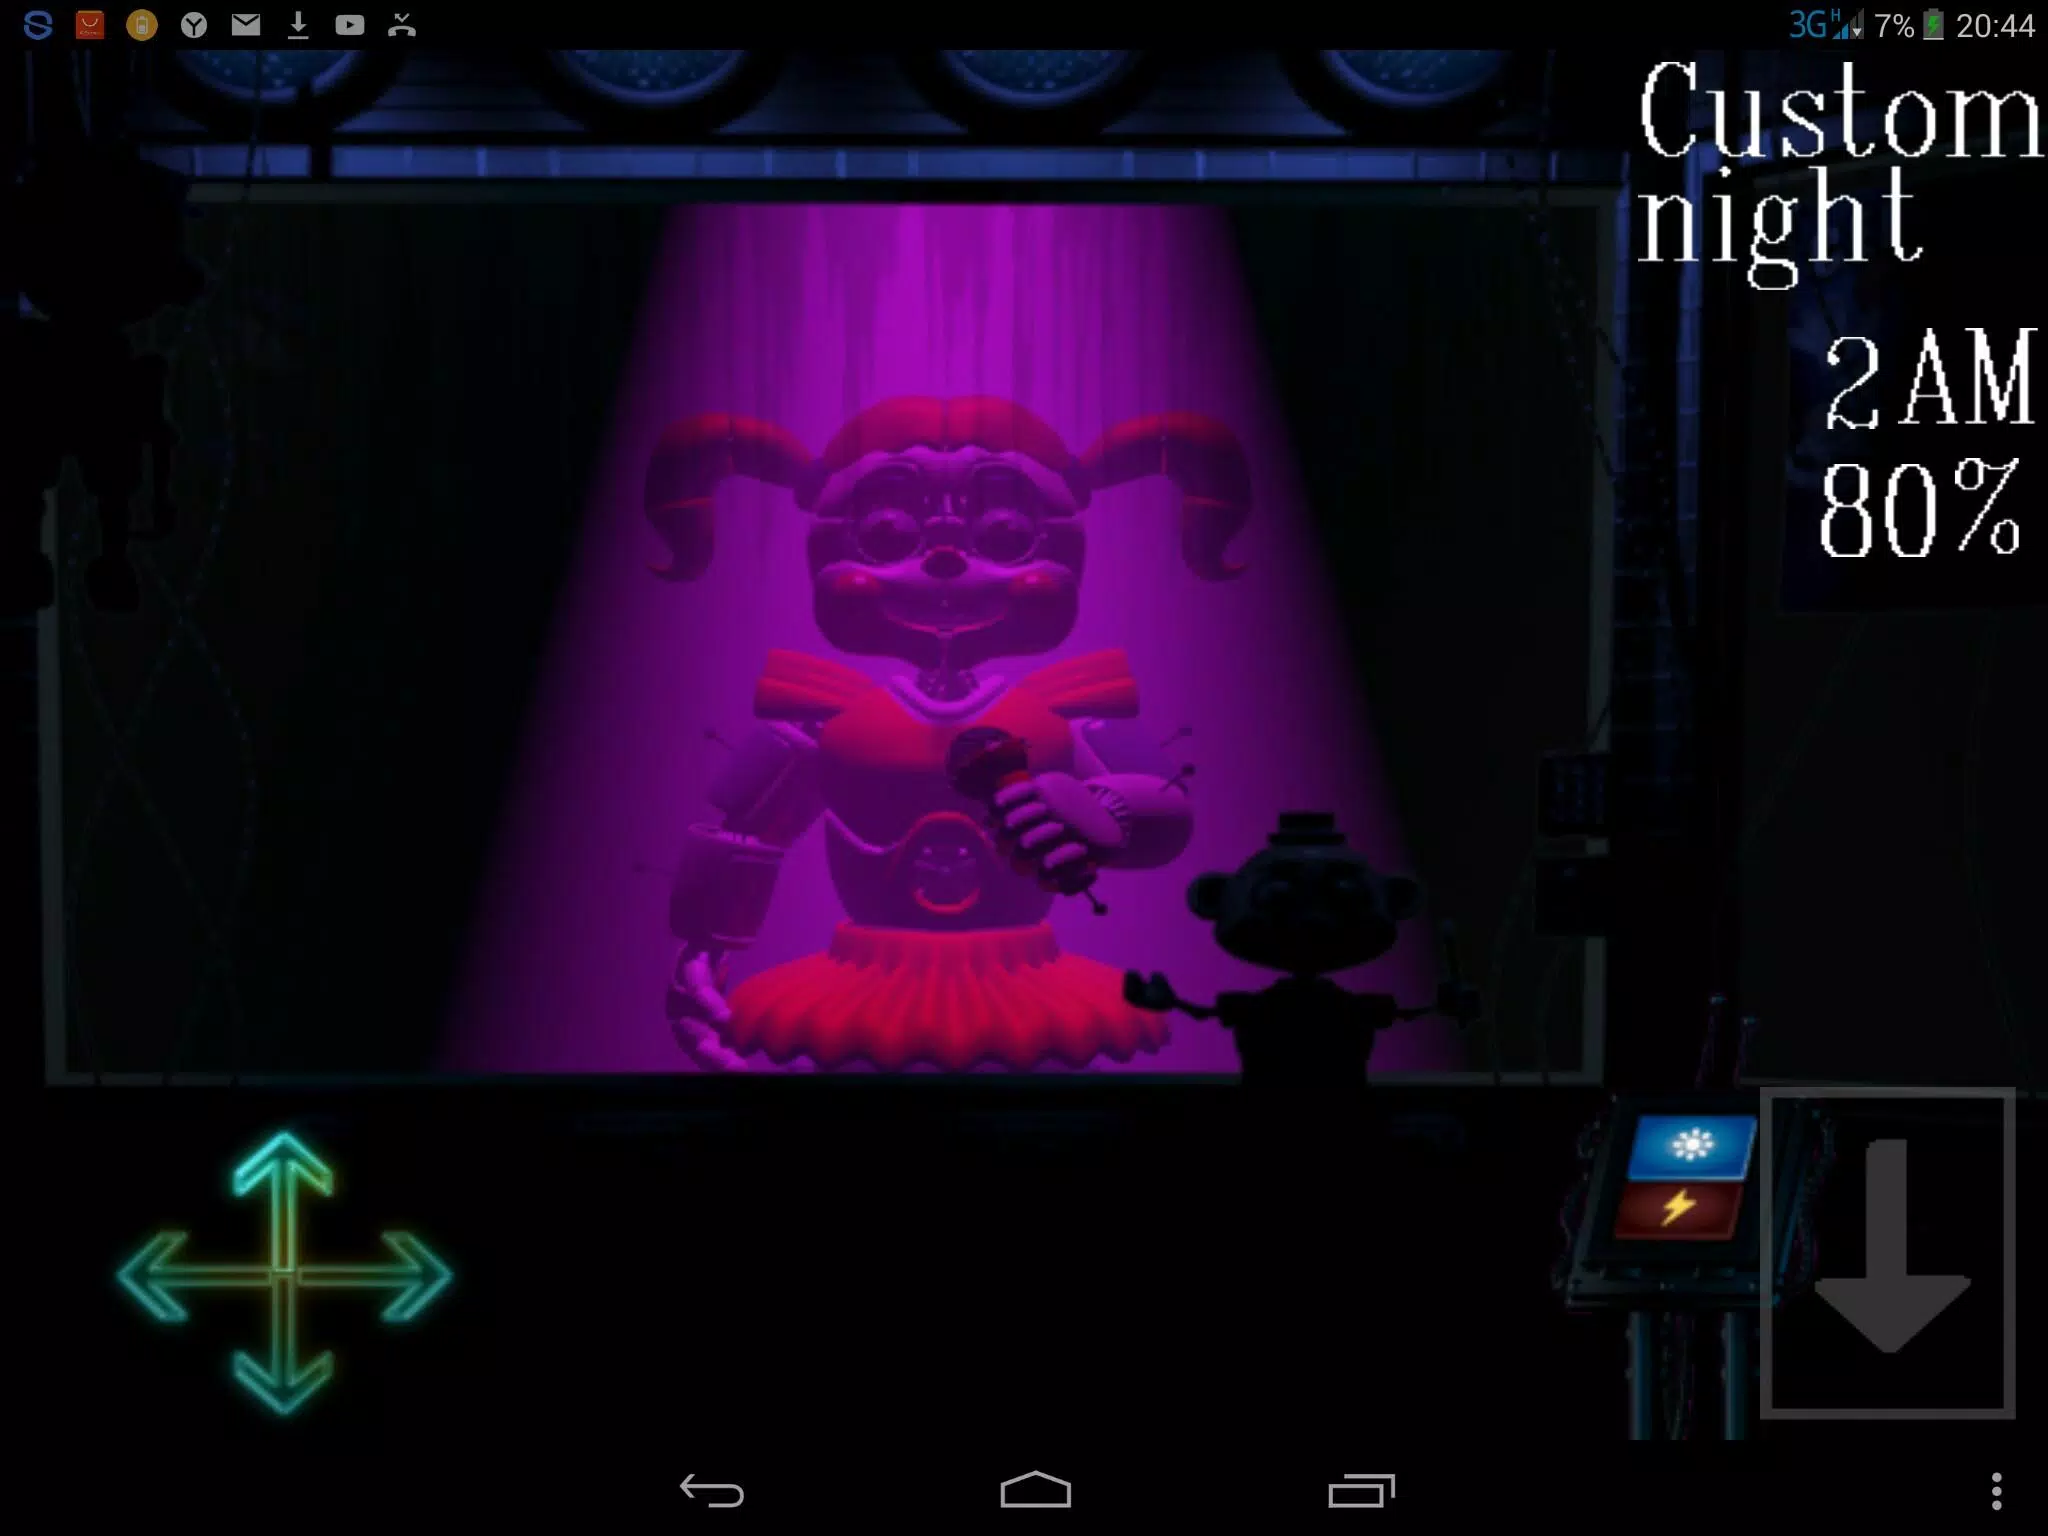 Five Nights at Candy's custom night APK (Android App) - Baixar Grátis